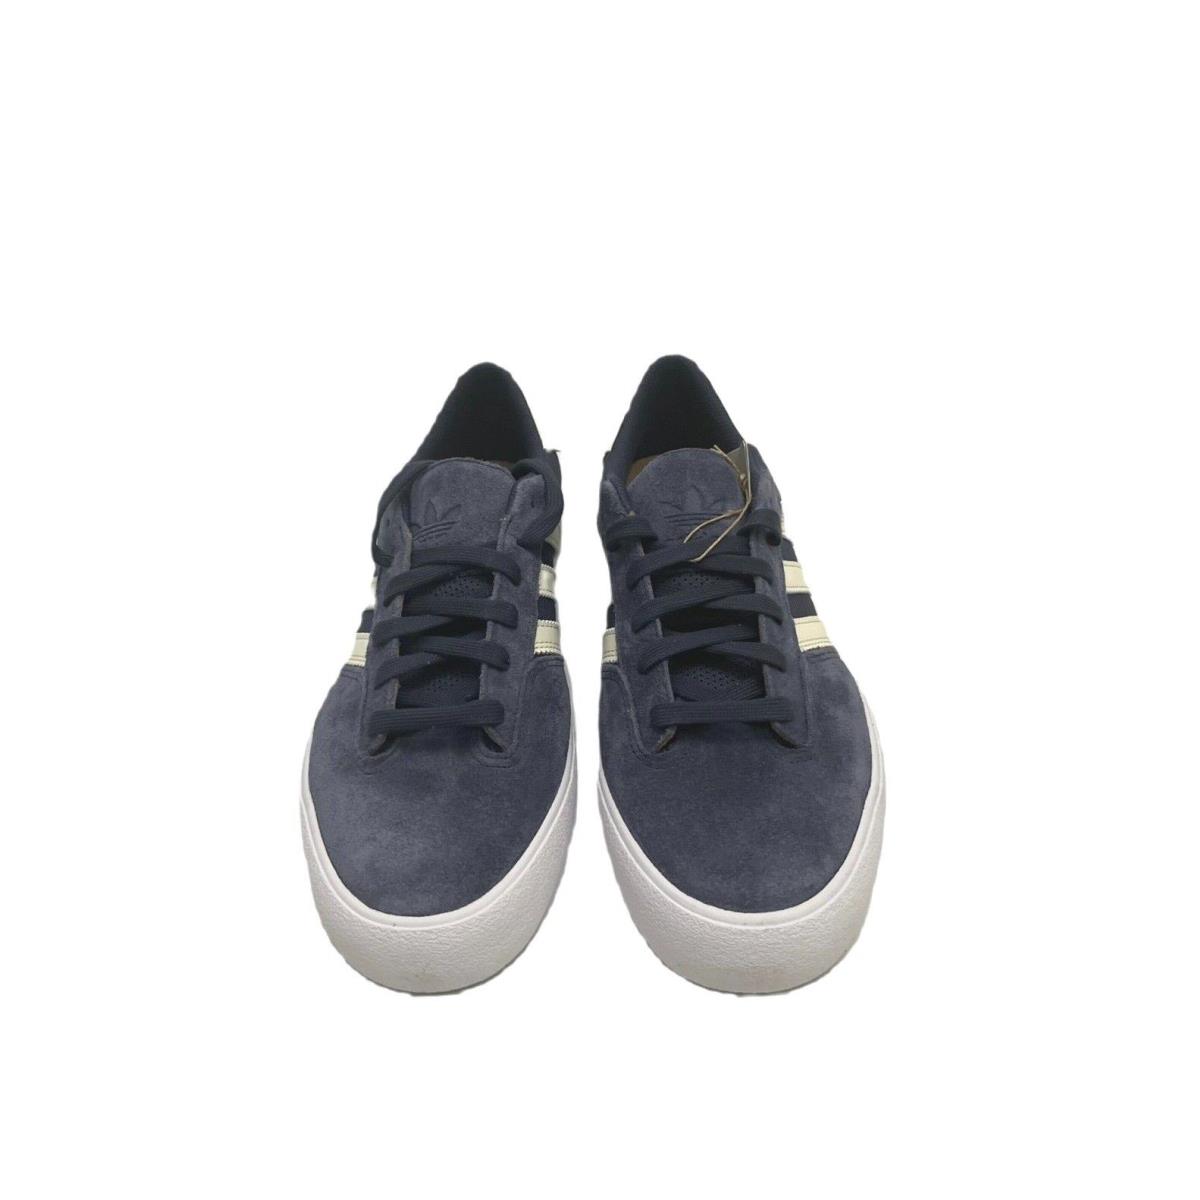 Adidas Men`s Matchbreak Super Activewear/casual Shoes - Shadow Navy/Cream White/Cloud White